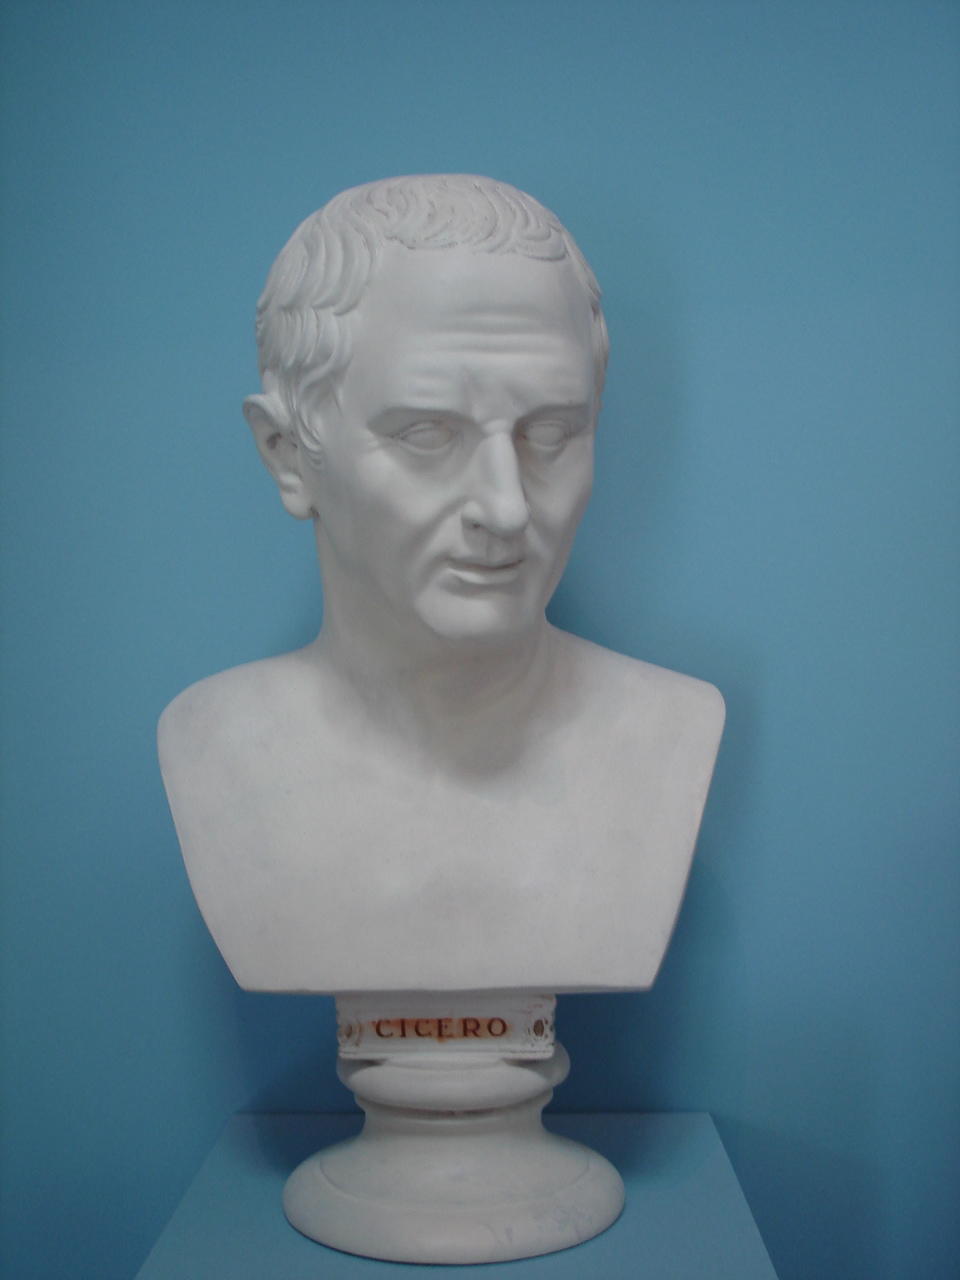 Sculpture of Cicero